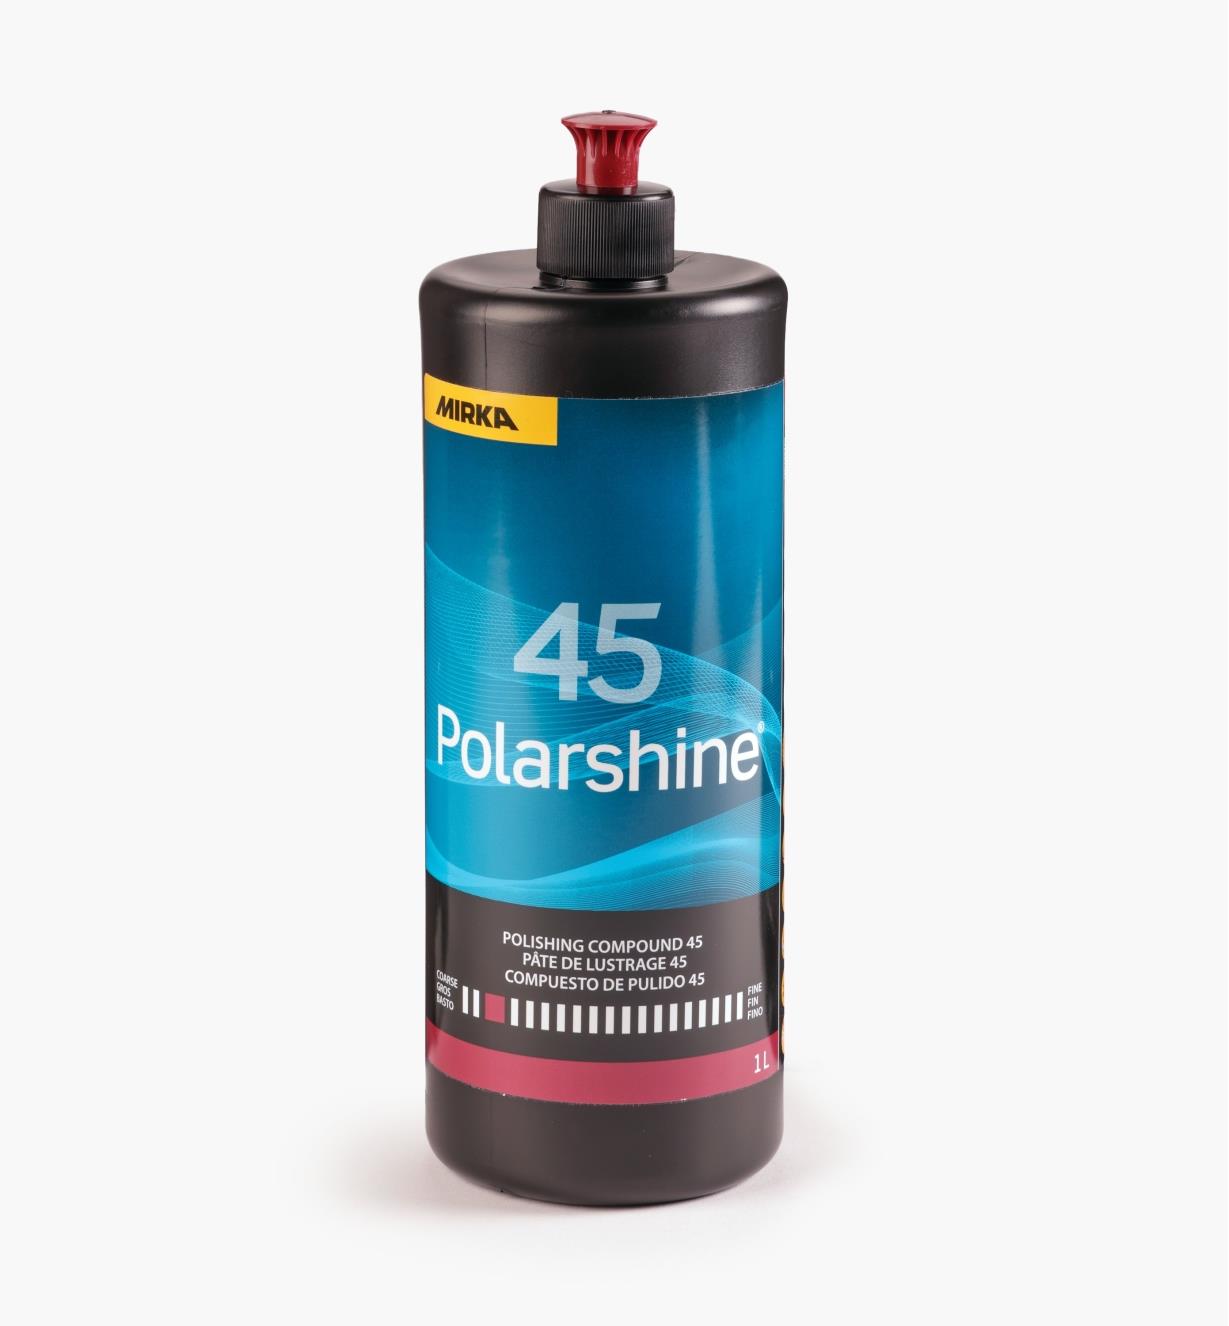 08K5001 - Mirka Polarshine 45 Polishing Compound, 1 litre